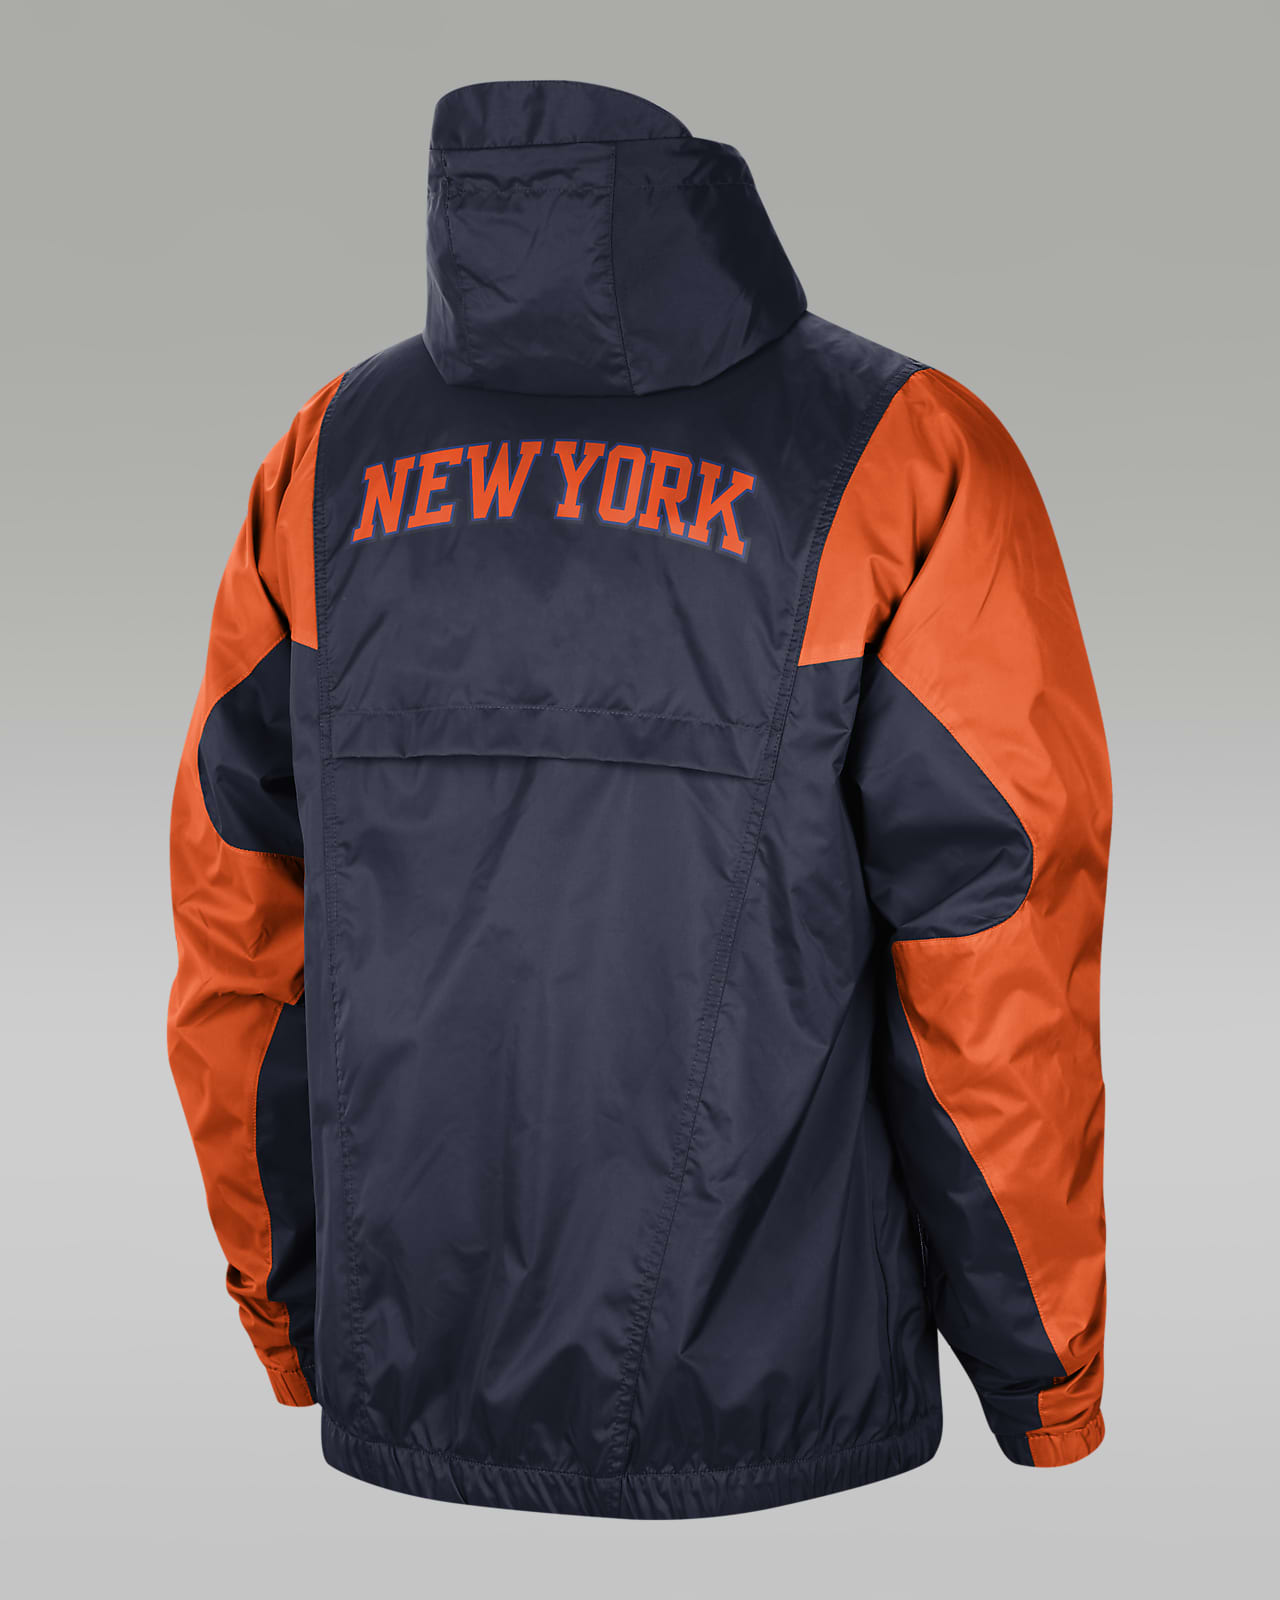 Vintage New York Knicks Starter Pullover Sweatshirt